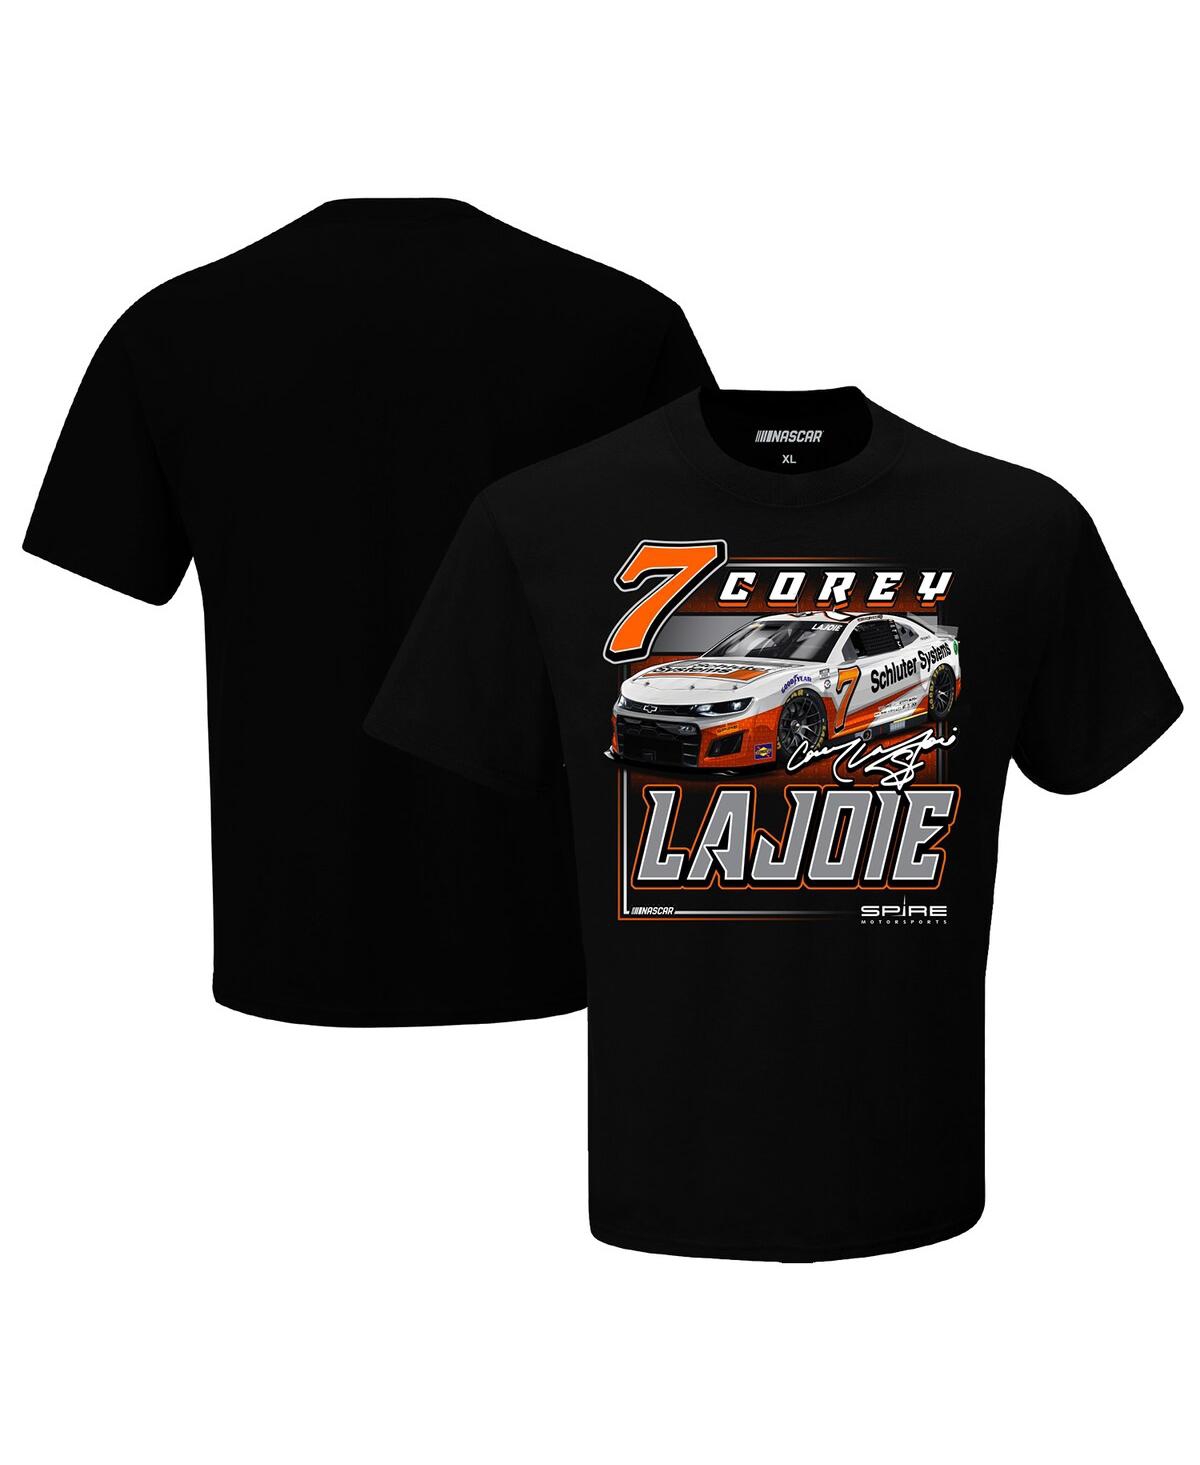 Men's Checkered Flag Sports Black Corey LaJoie Schluter Systems Car T-shirt - Black